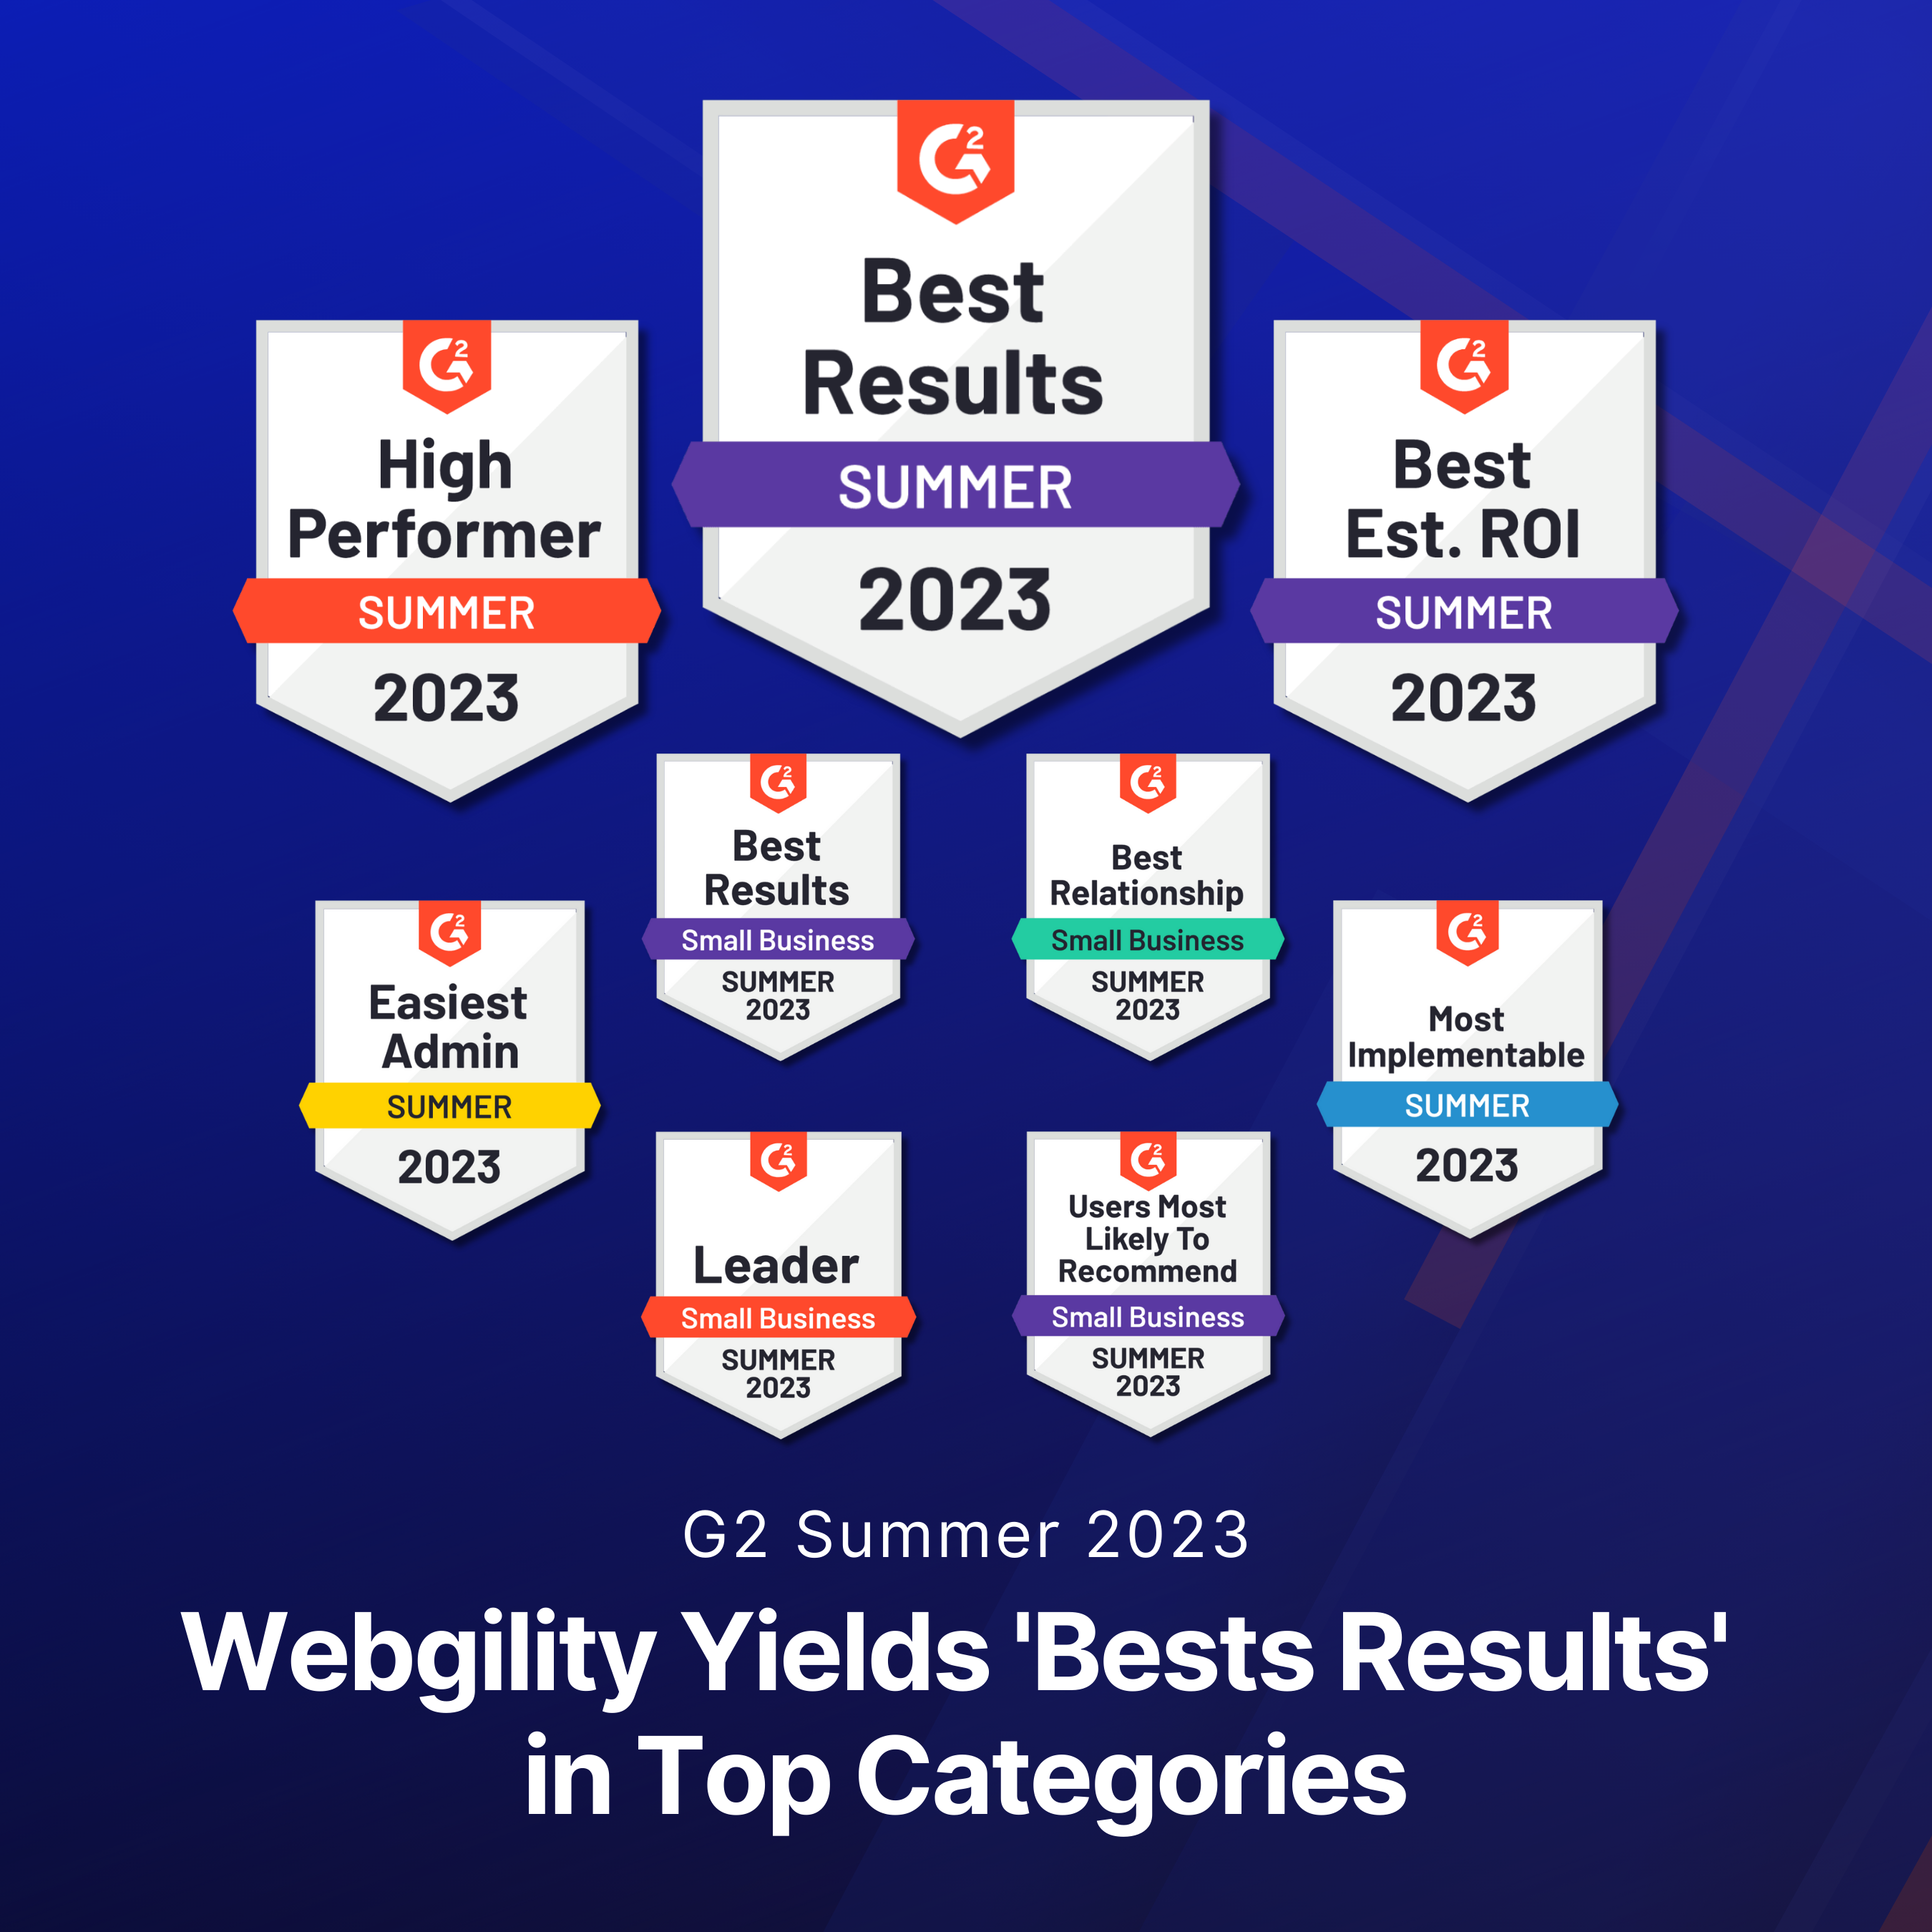 Webgility yields ‘Best Results’ in top G2 categories